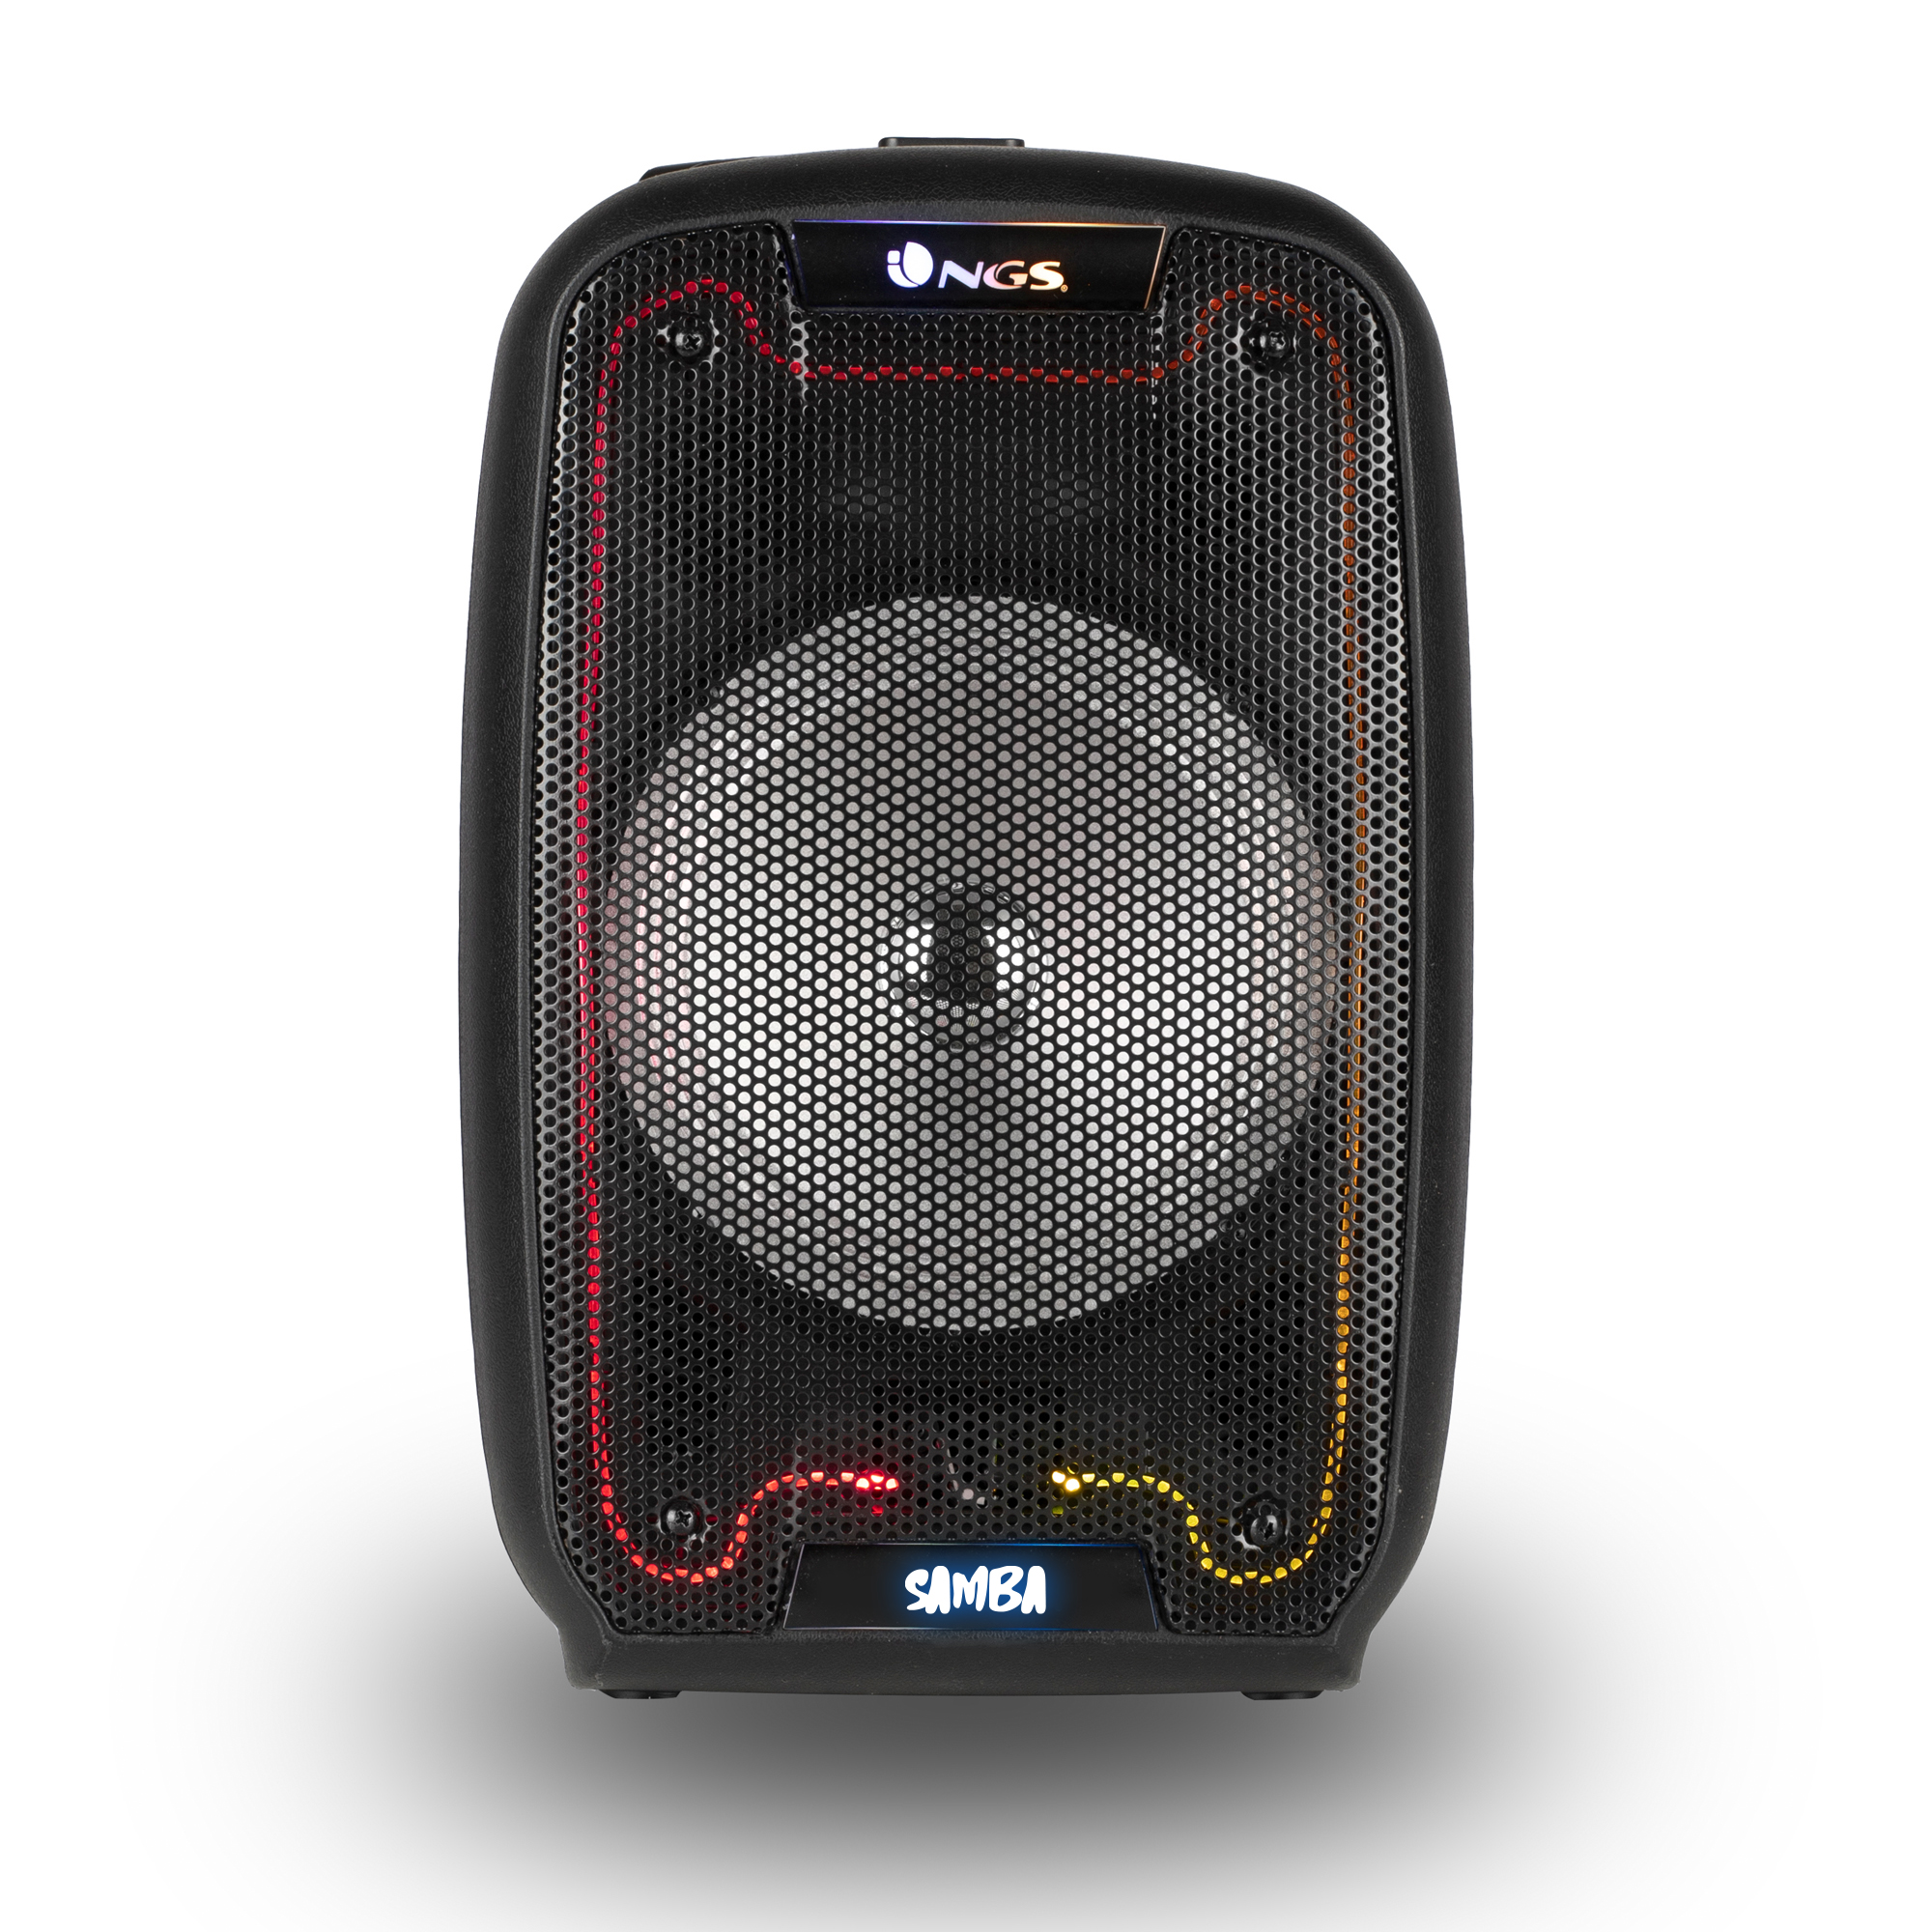 NGS Wild Samba Premium Lautsprecher (Aktiv-speaker, Schwarz)